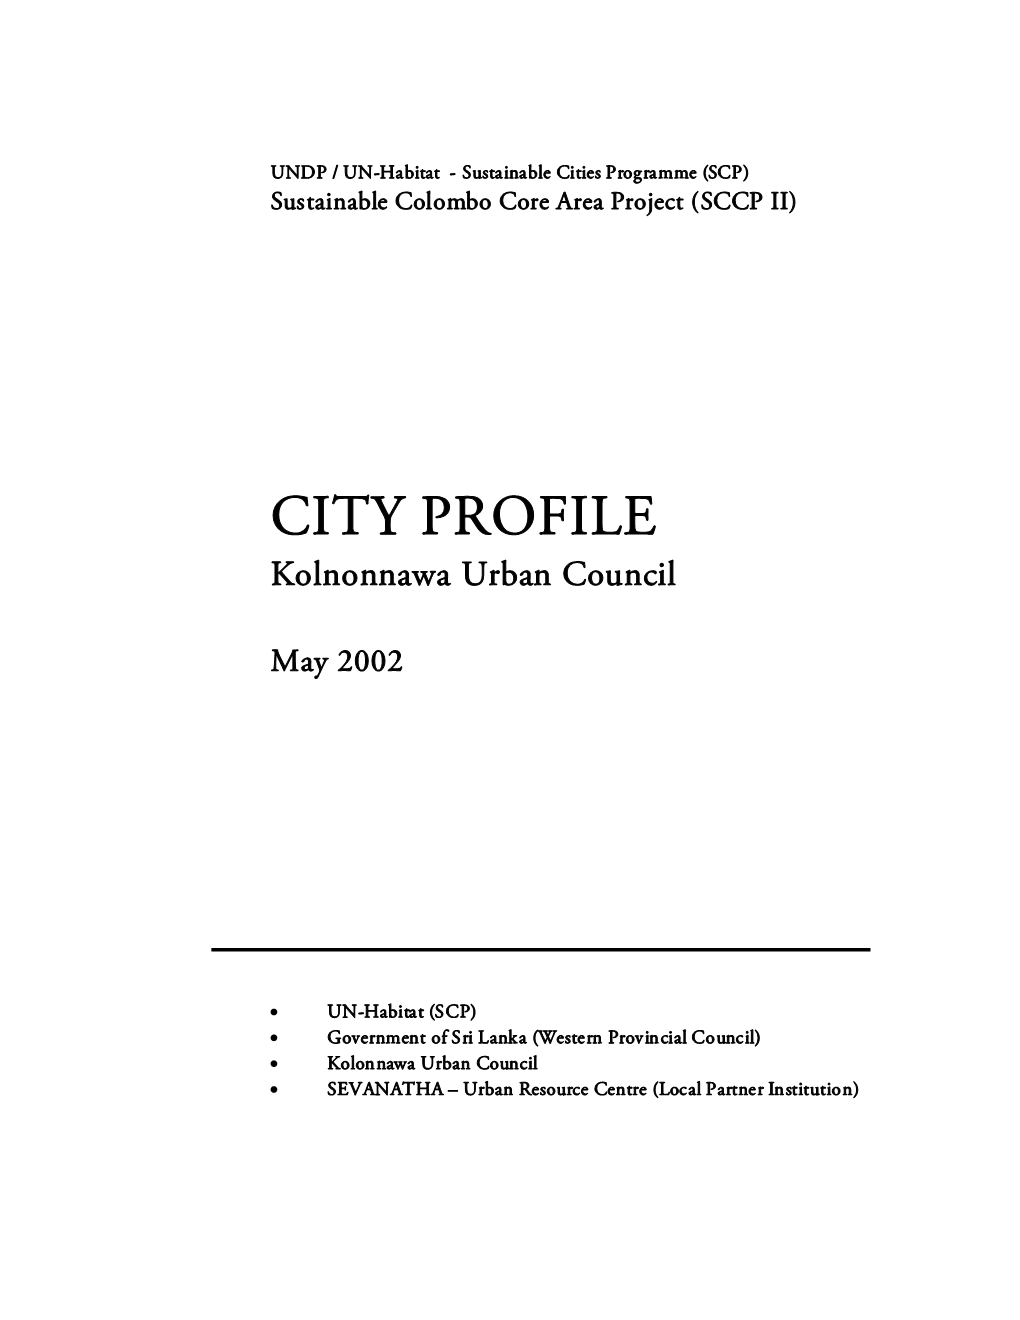 Kolonnawa Urban Council • SEVANATHA – Urban Resource Centre (Local Partner Institution)